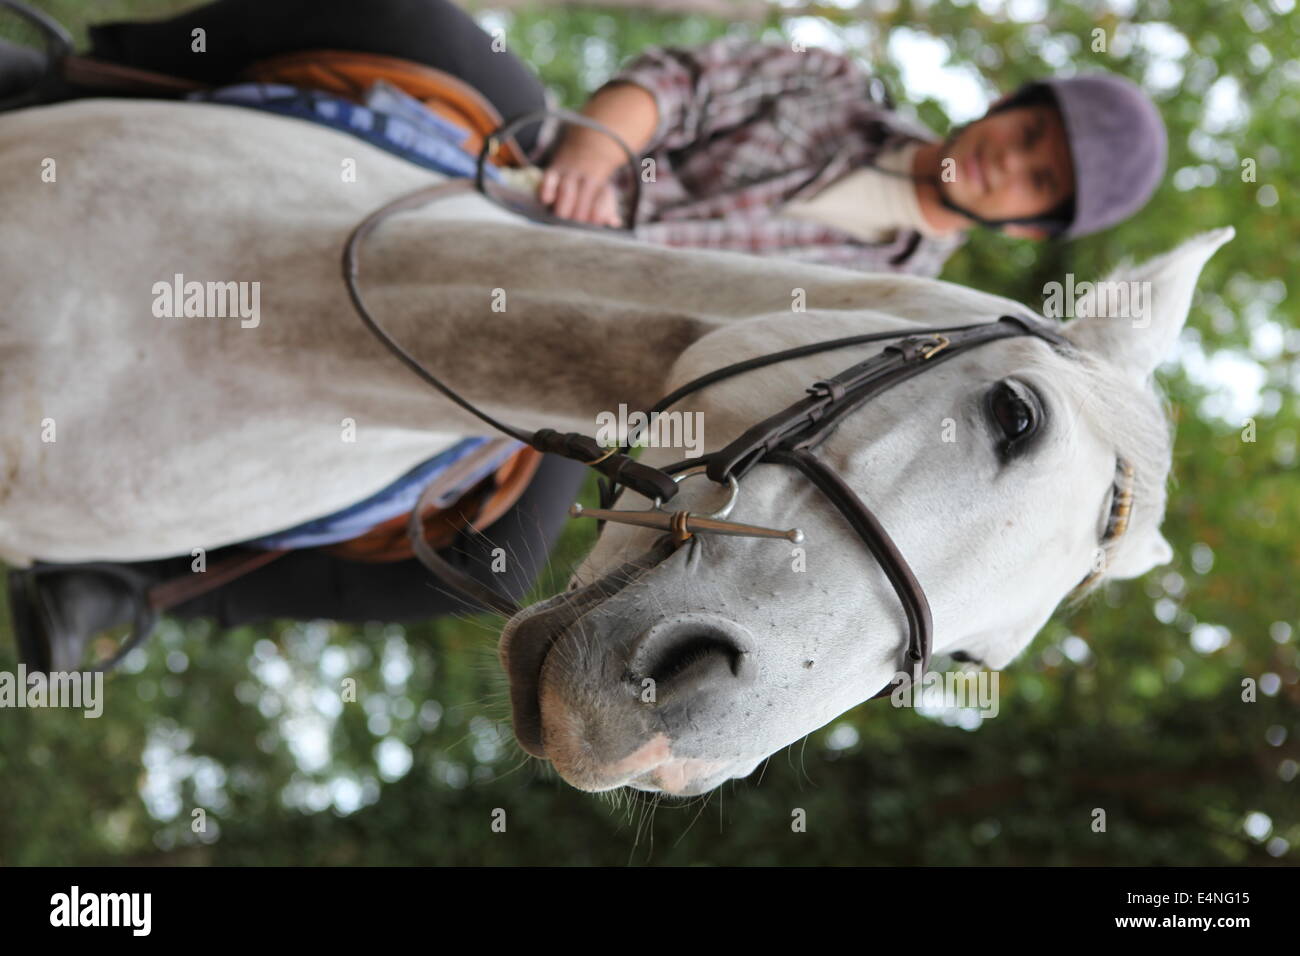 Landscape image of teenager riding horse Stock Photo